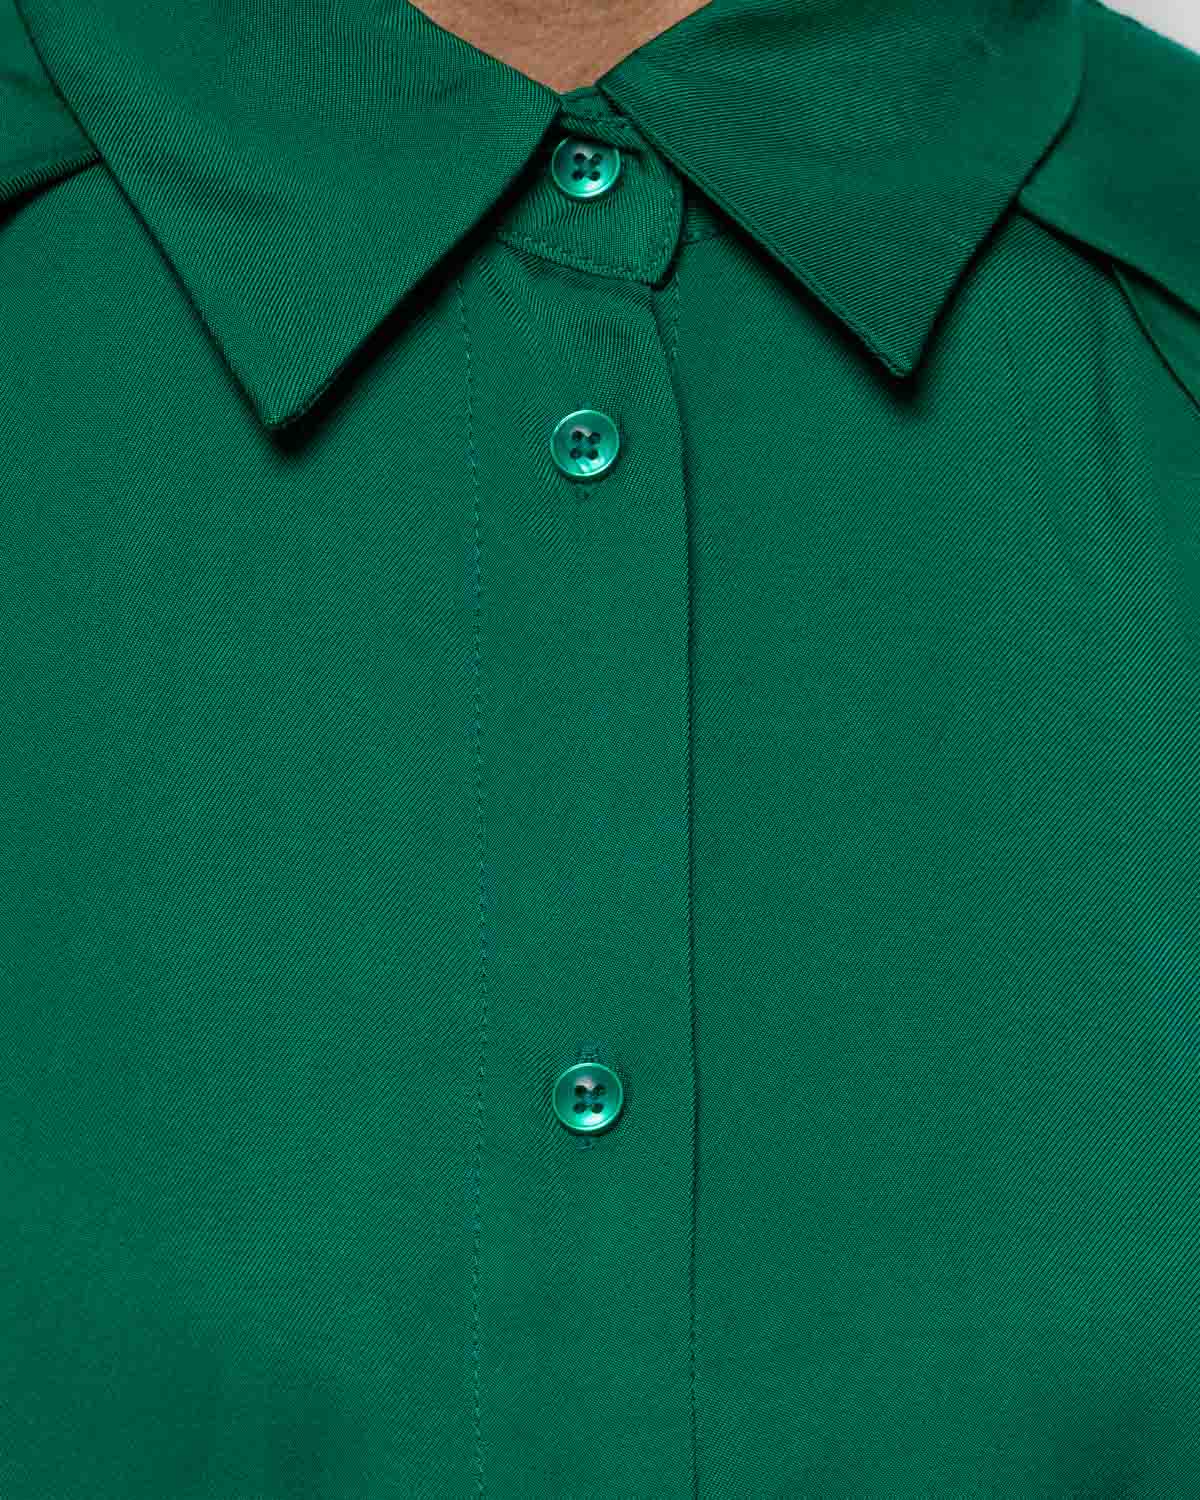 InWear Cleo Shirt in Emerald Green